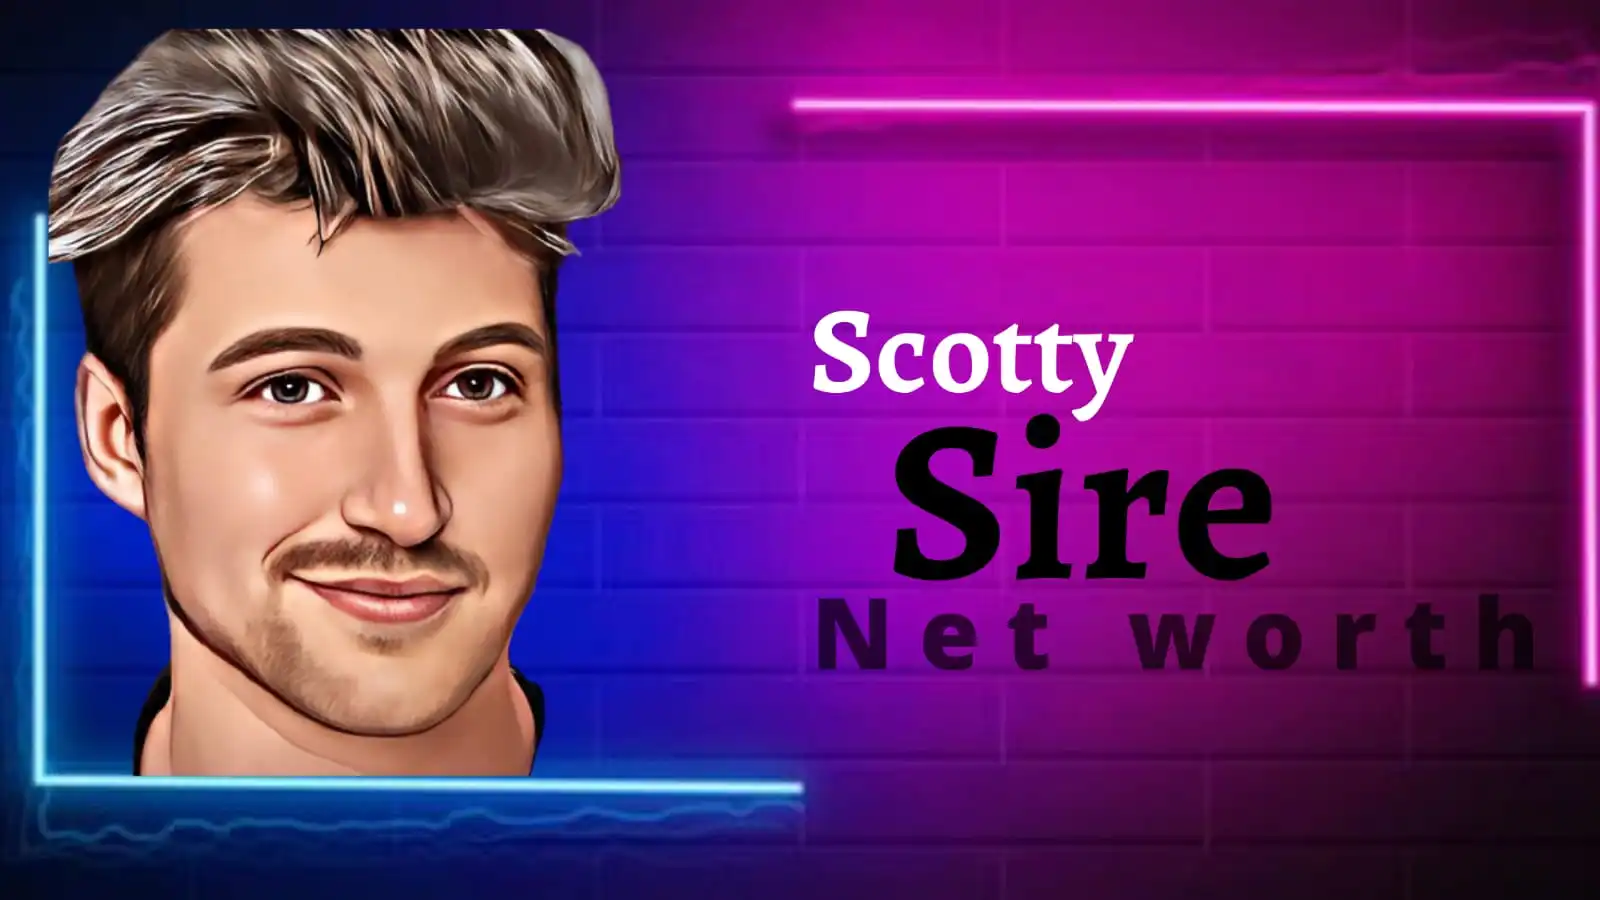 Scotty Sire net worth